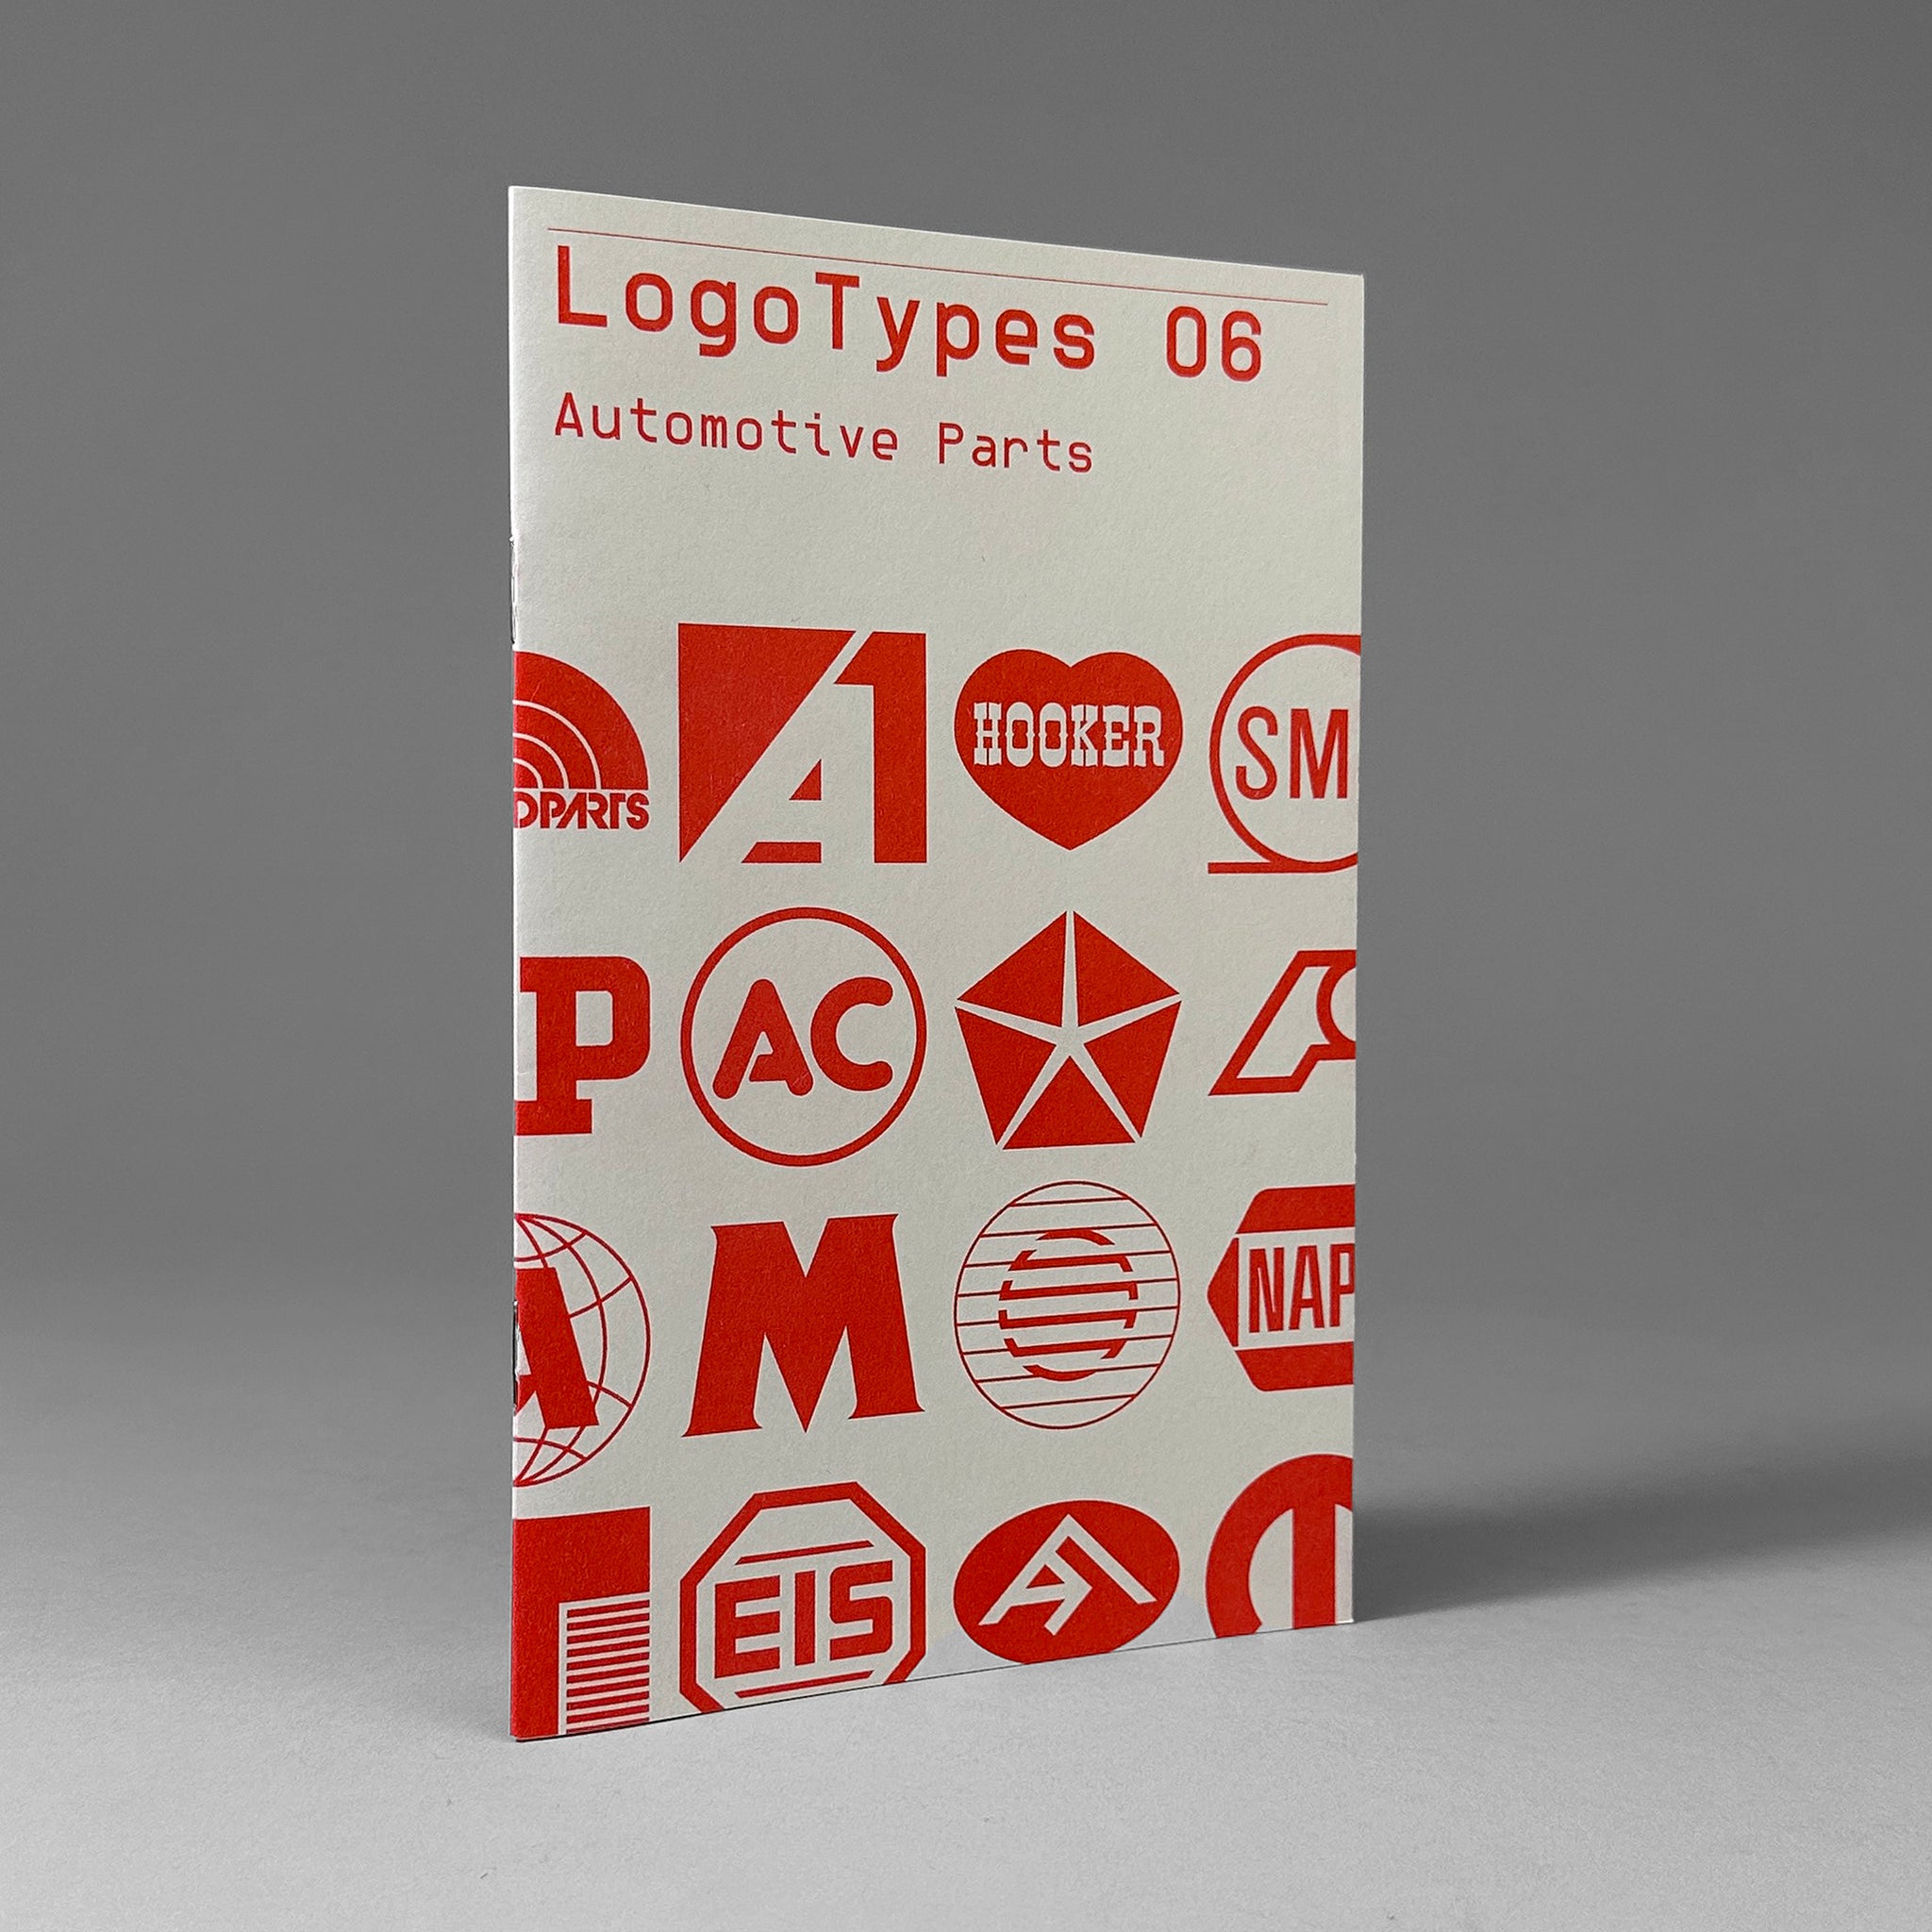 LogoTypes 06: Automotive Parts